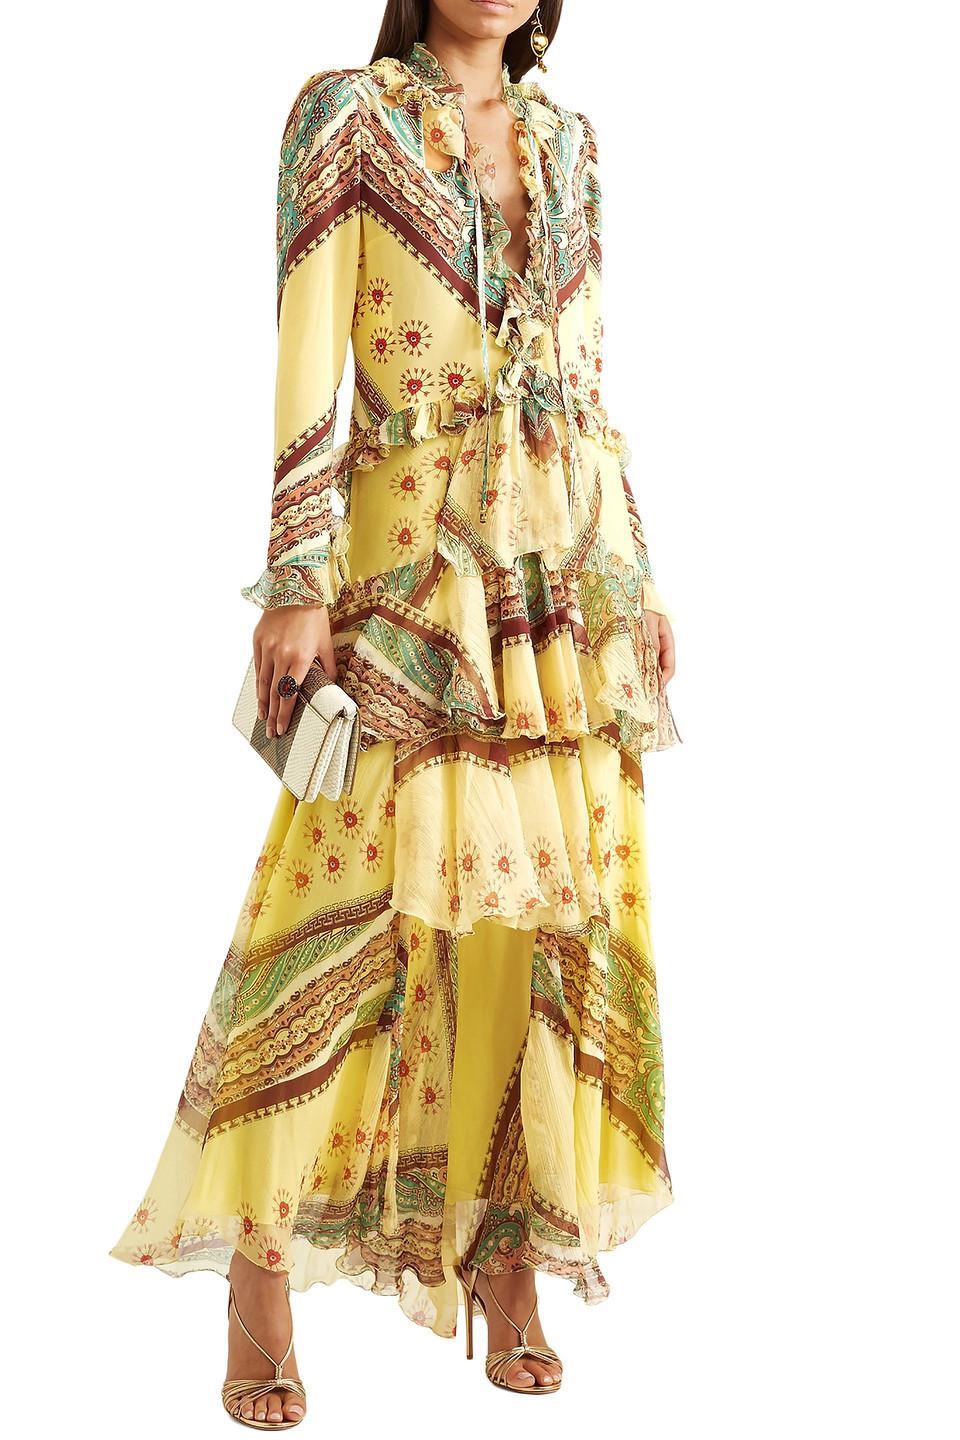 etro yellow dress